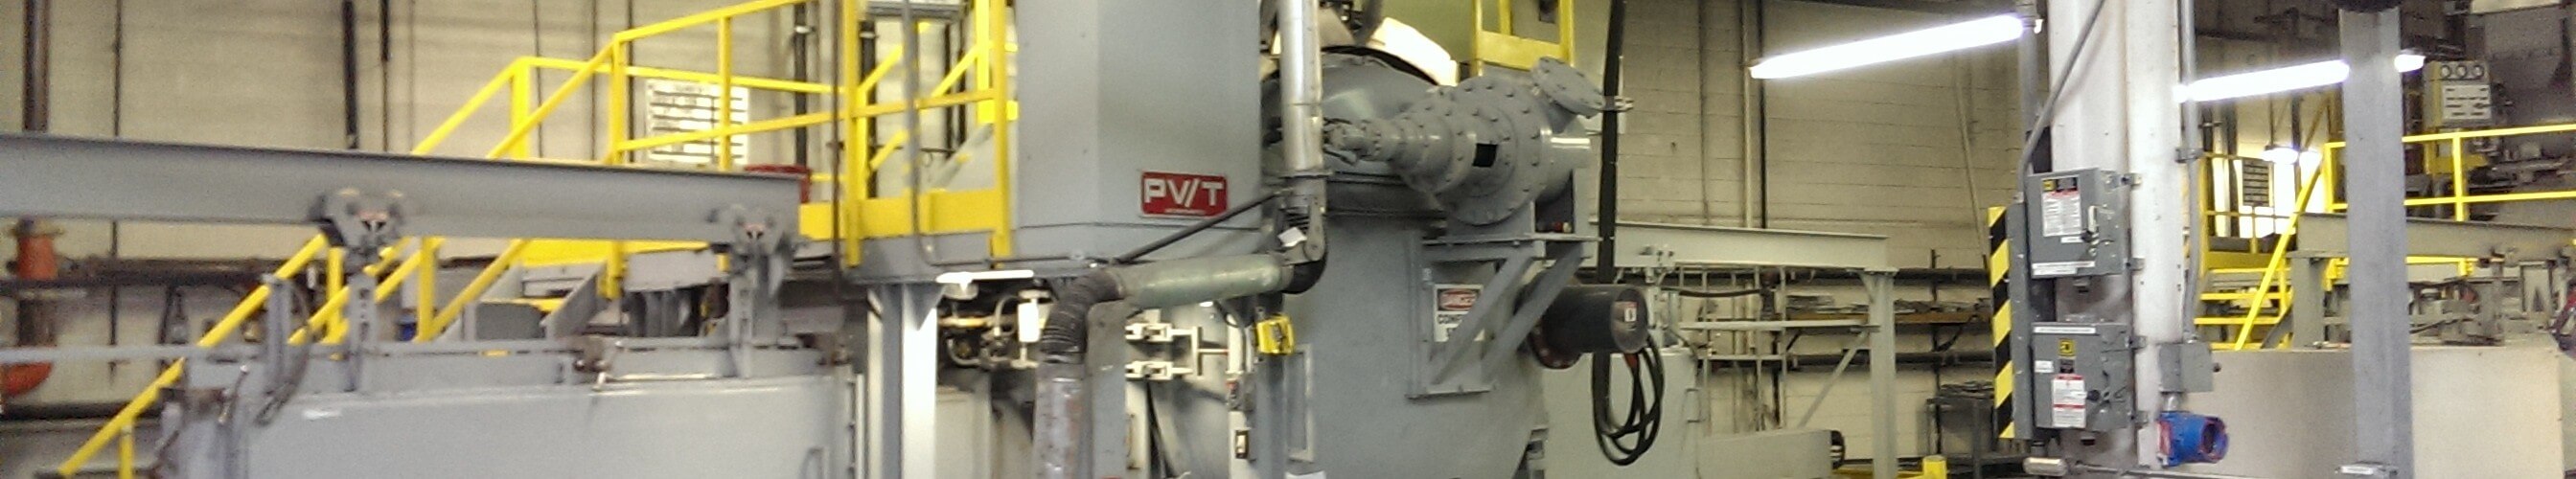 photo of metal alloy machinery at Eutectix